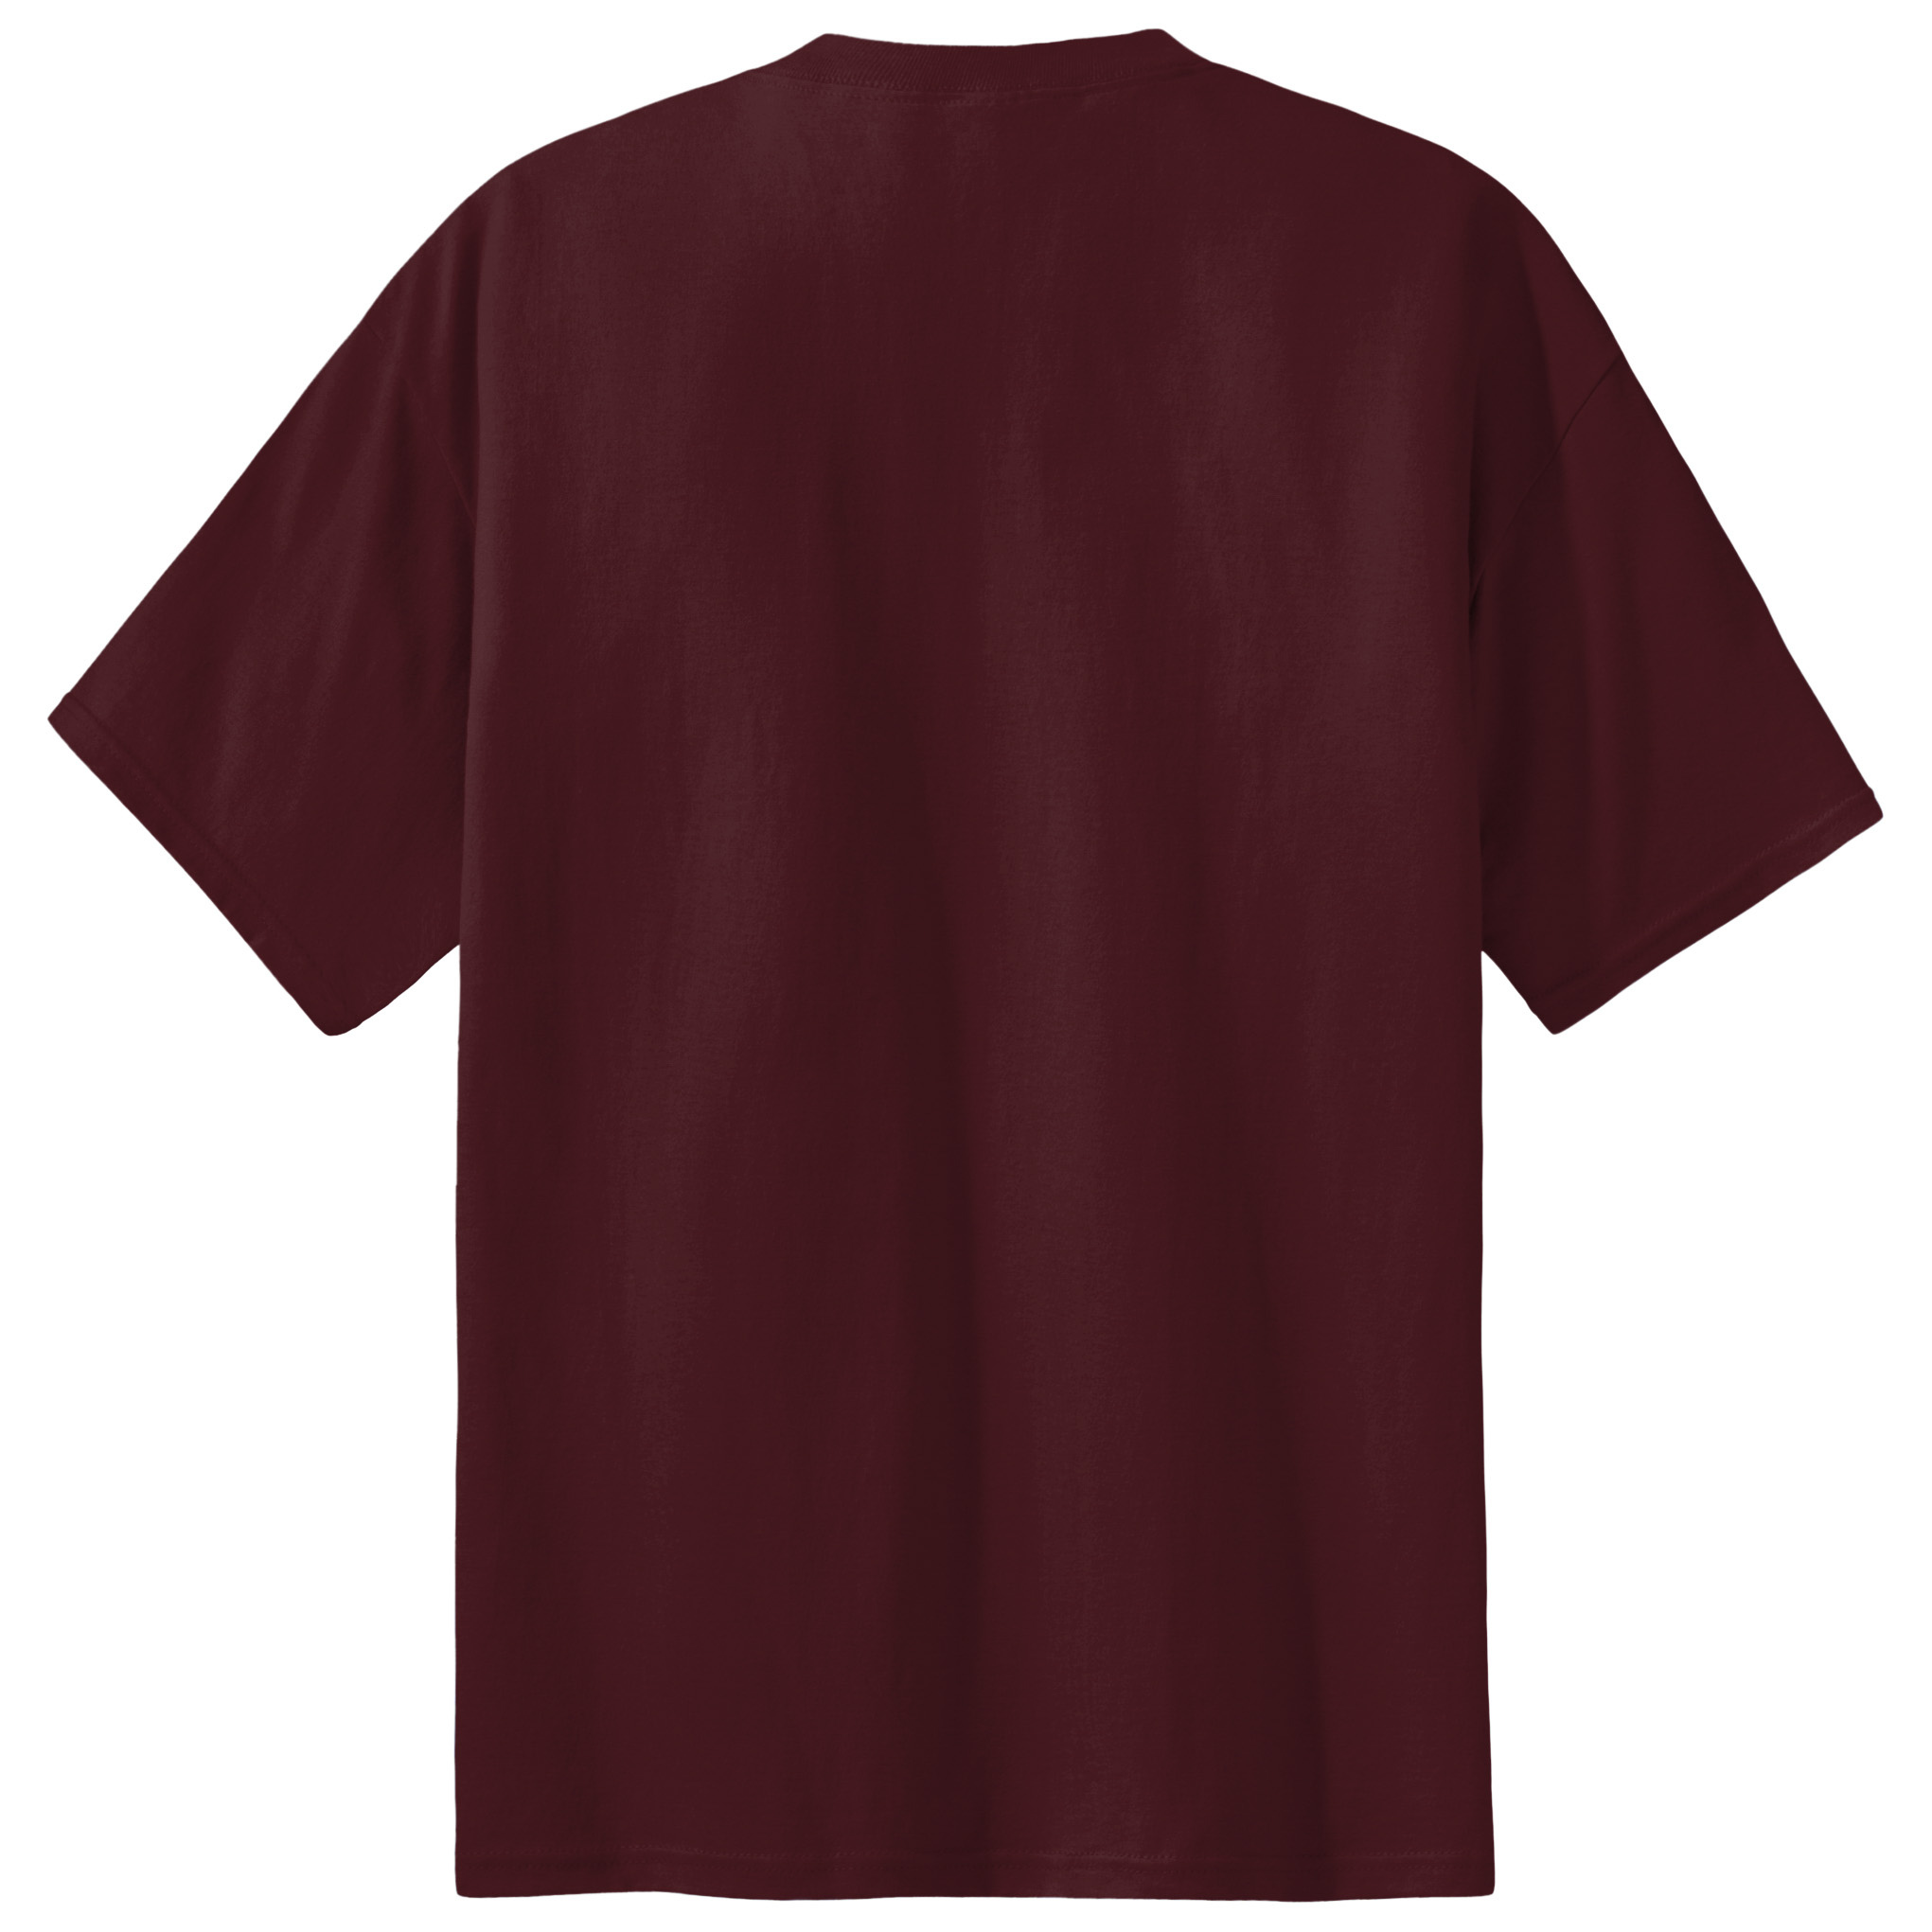 Surprise 100% Silk Unisex Maroon Red Short Sleeve Shirt 